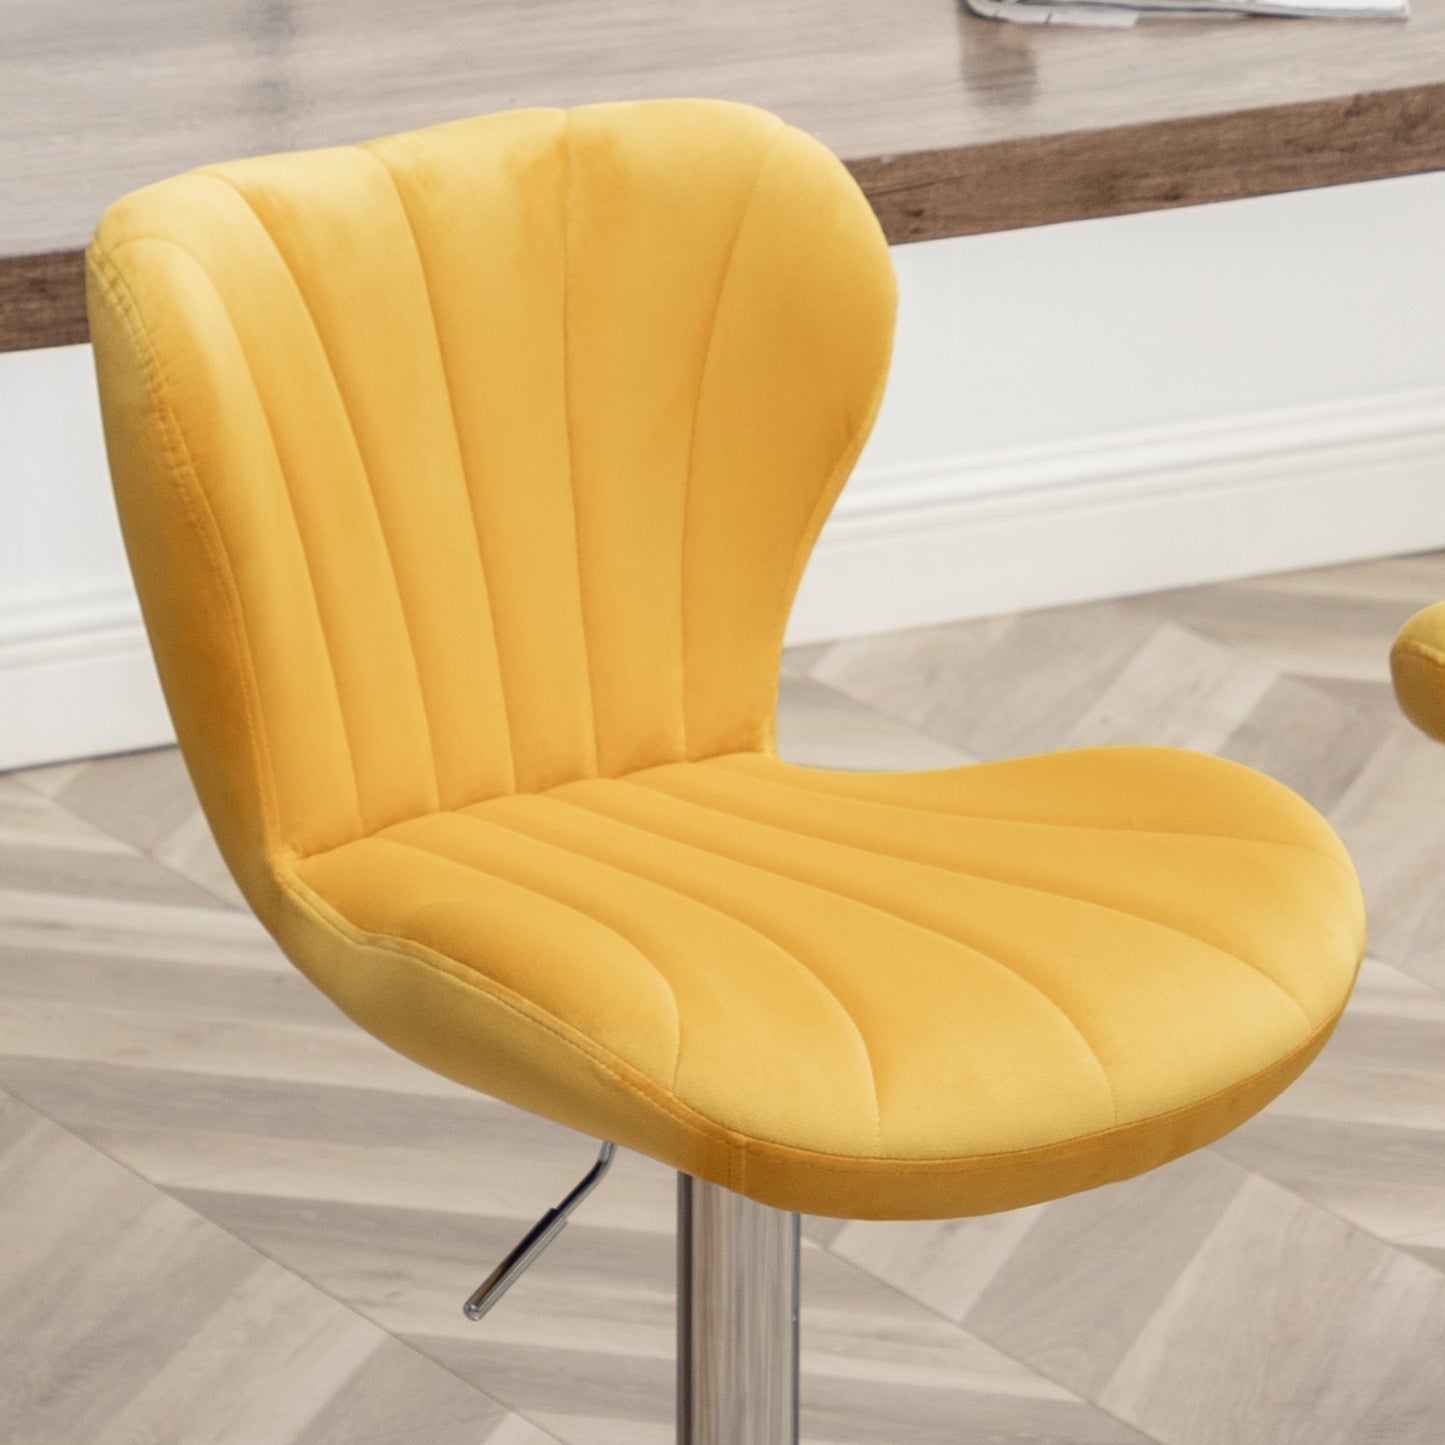 Ellston Upholstered Adjustable Swivel Barstools in Yellow, Set of 2